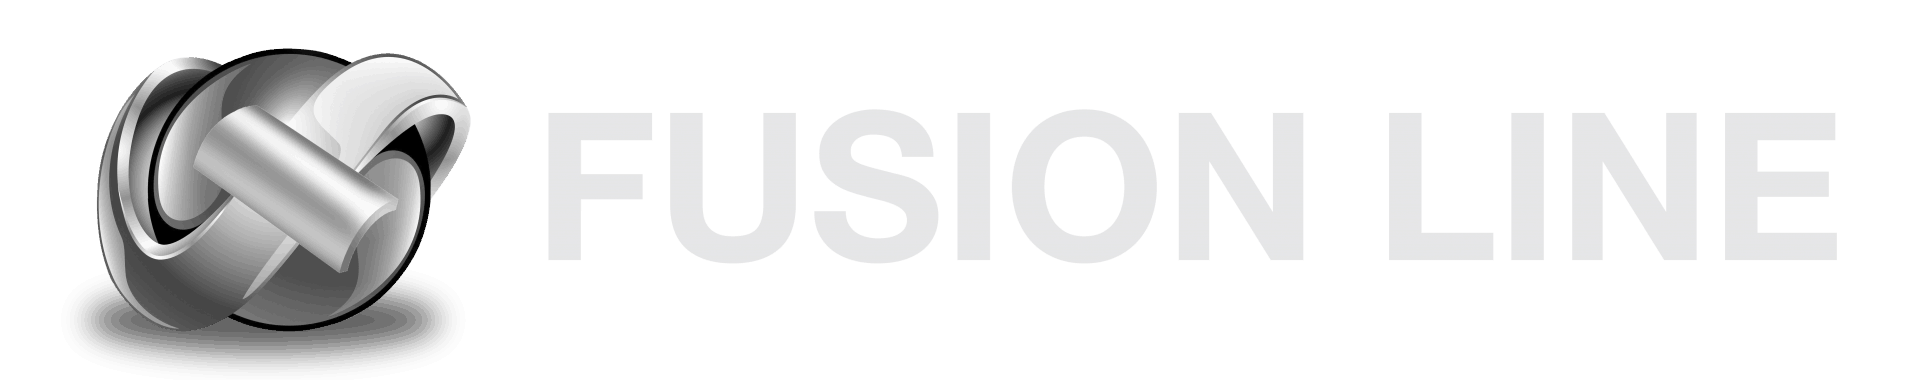 Fusion Line logo